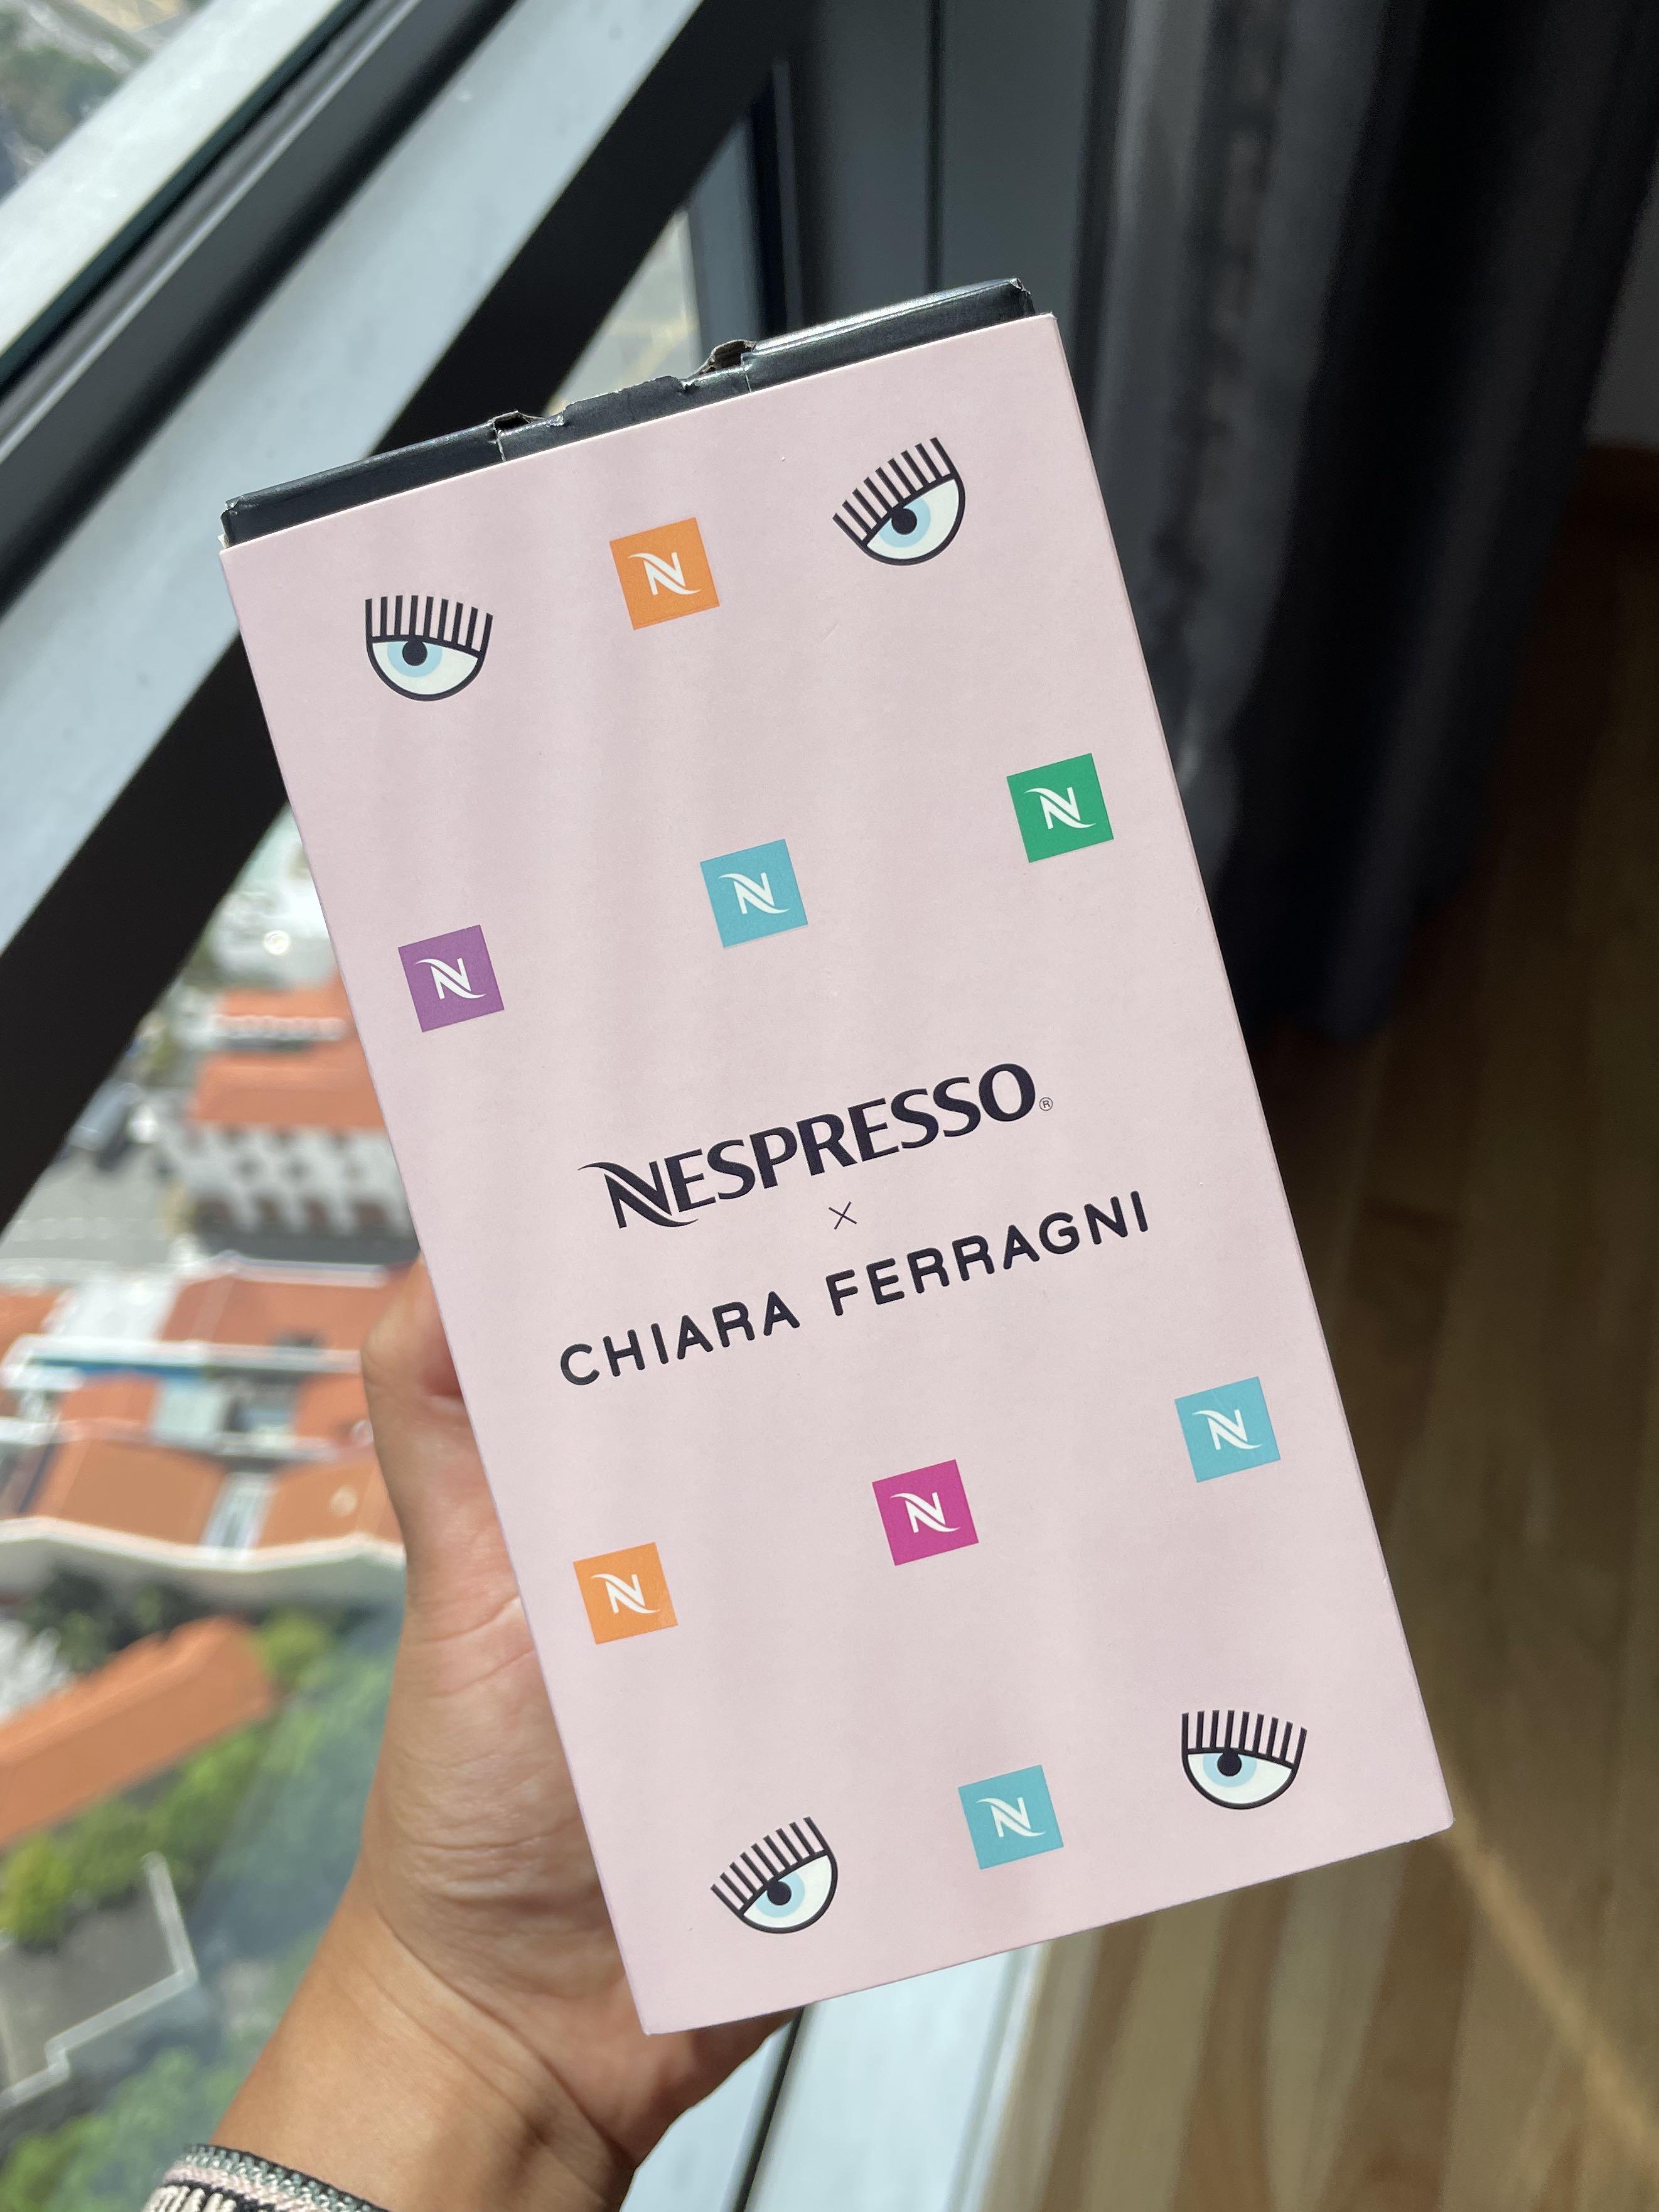 Nespresso x Chiara Ferragni Limited Edition Nomad Travel Mug Tumbler, Neu  OVP